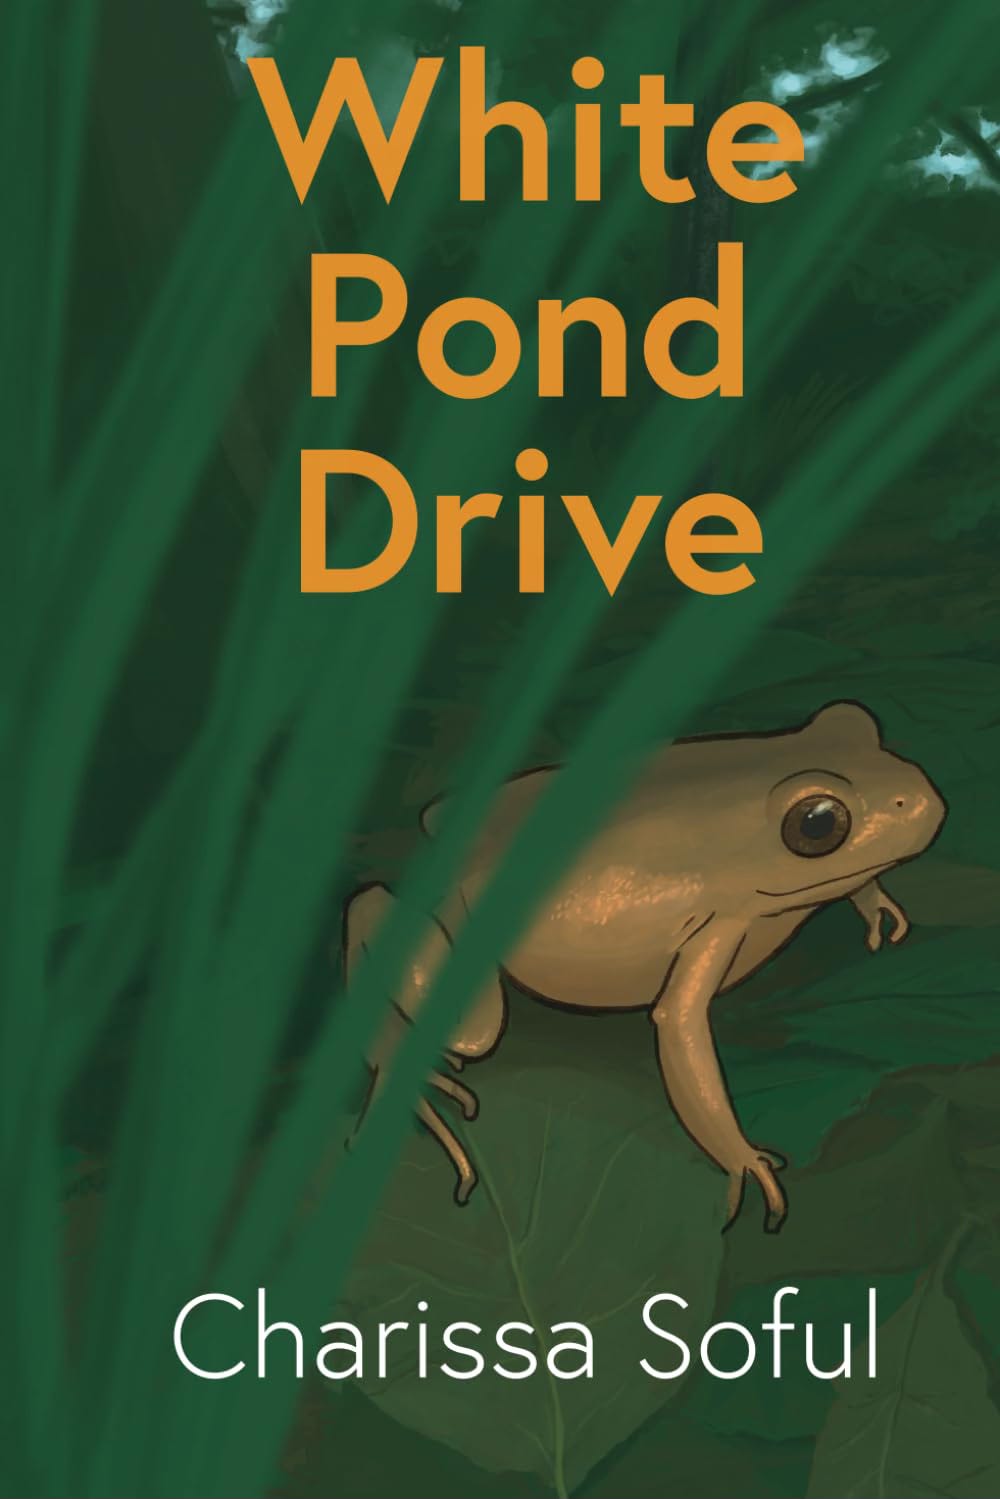 White Pond Drive book cover picture